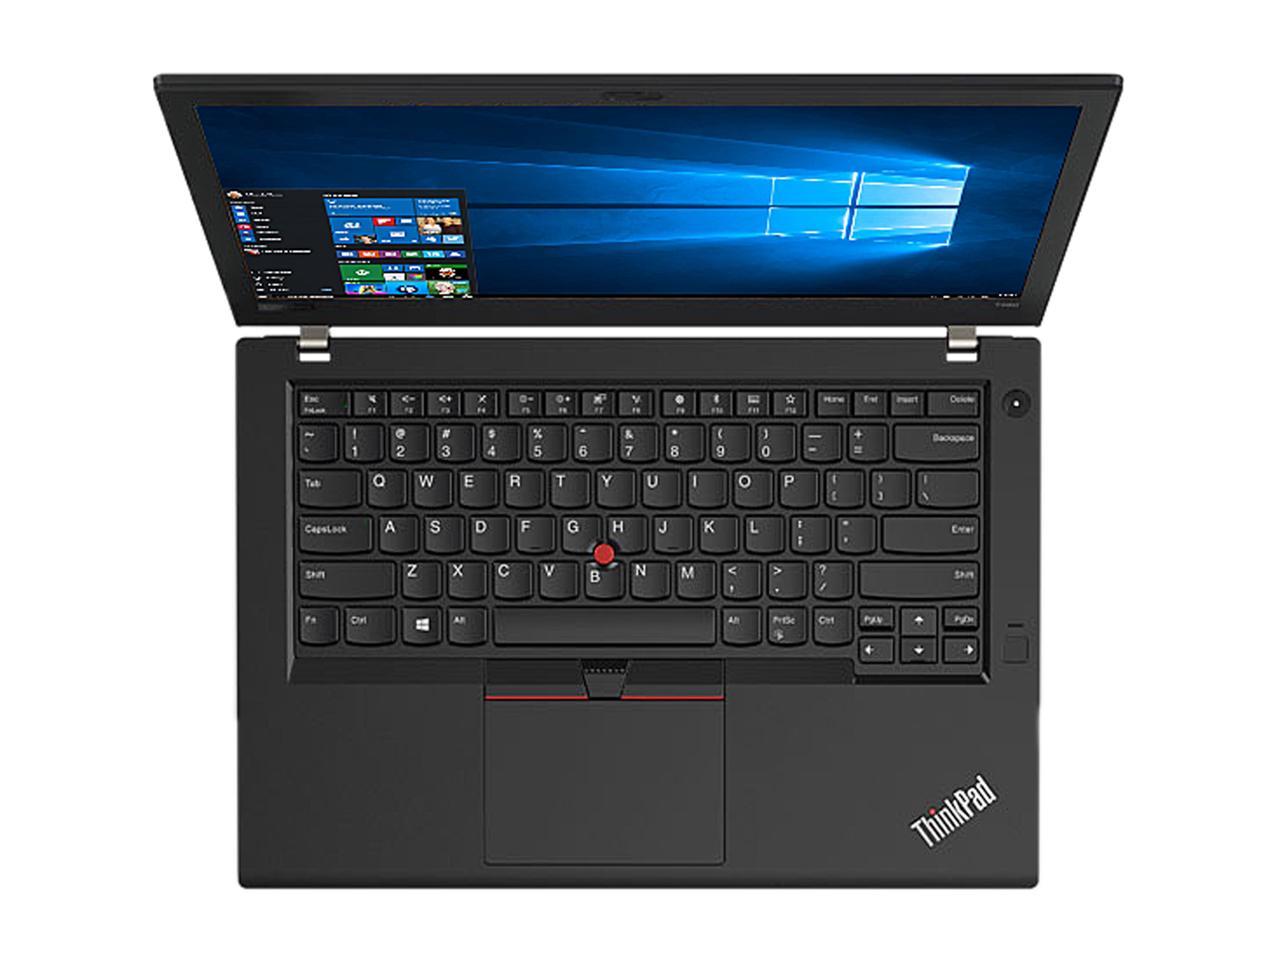 Used - Good: Lenovo ThinkPad T480 20L5000UUS 14" LCD Notebook - Intel